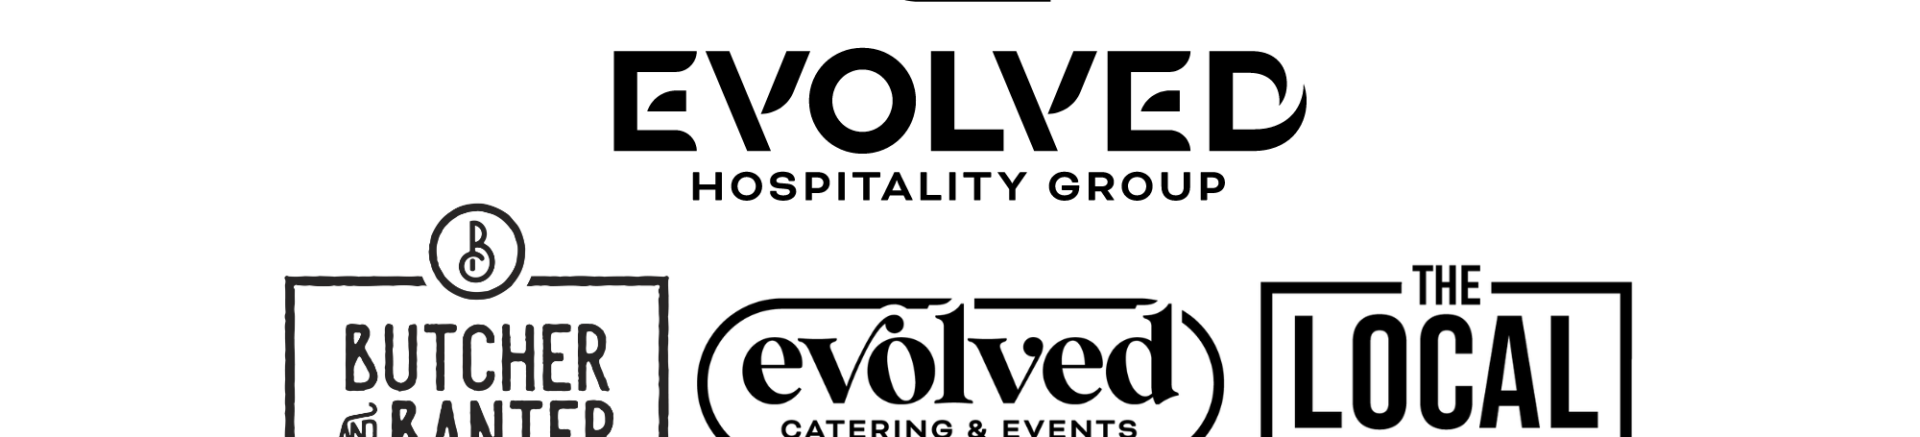 Evolved Hospitality Group